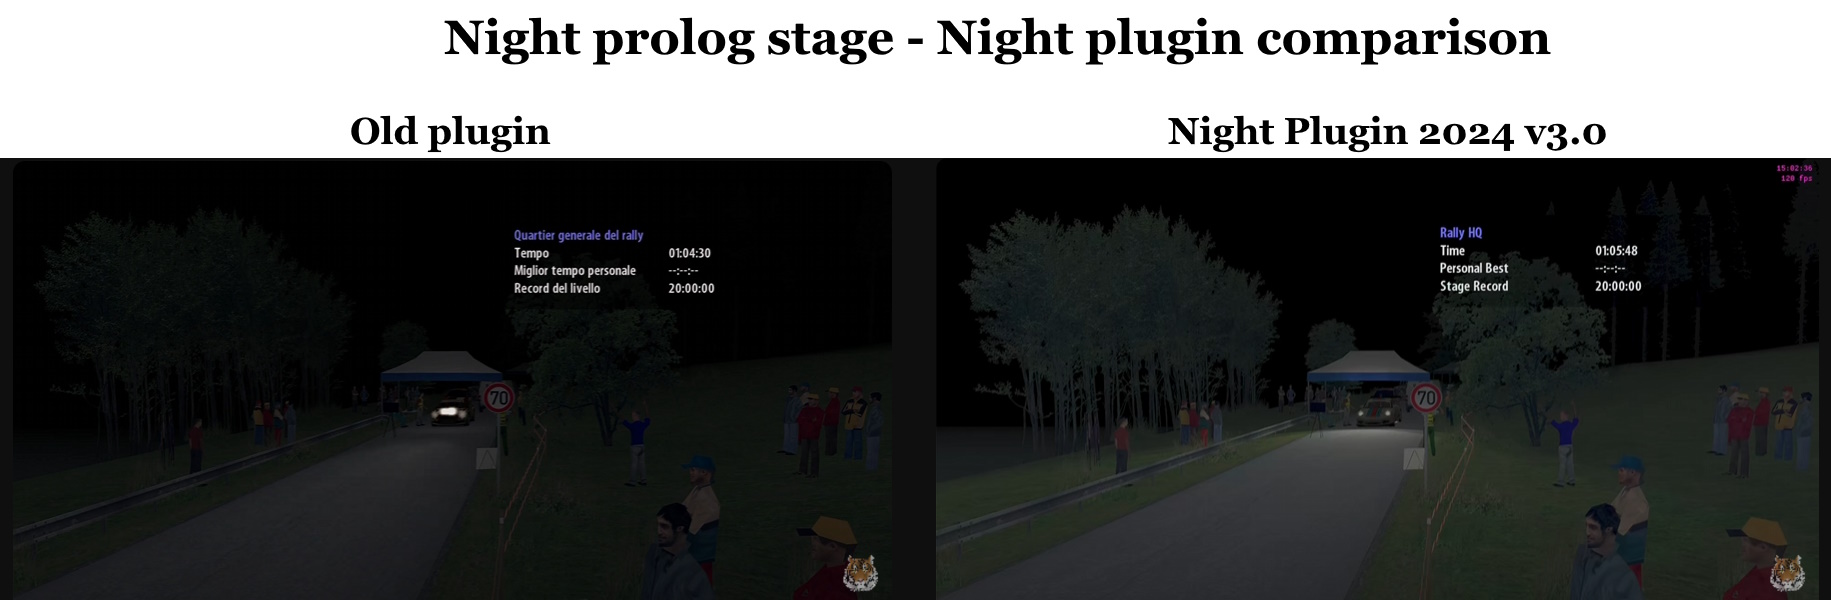 Night Plugin Comparison.jpg